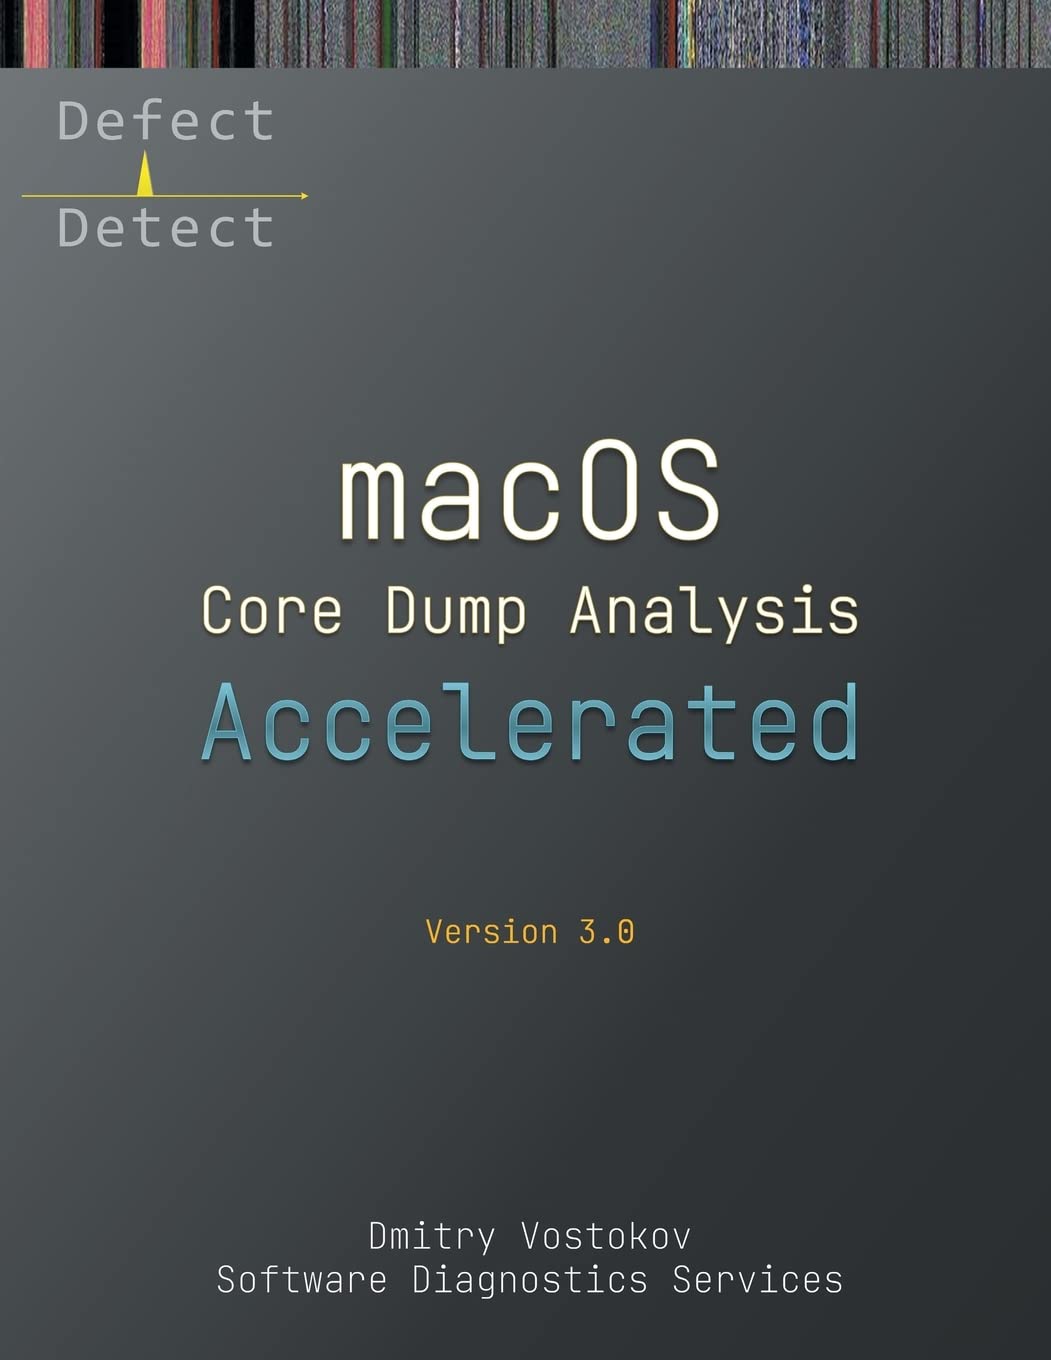 macOS Core Dump Analysis Training Course